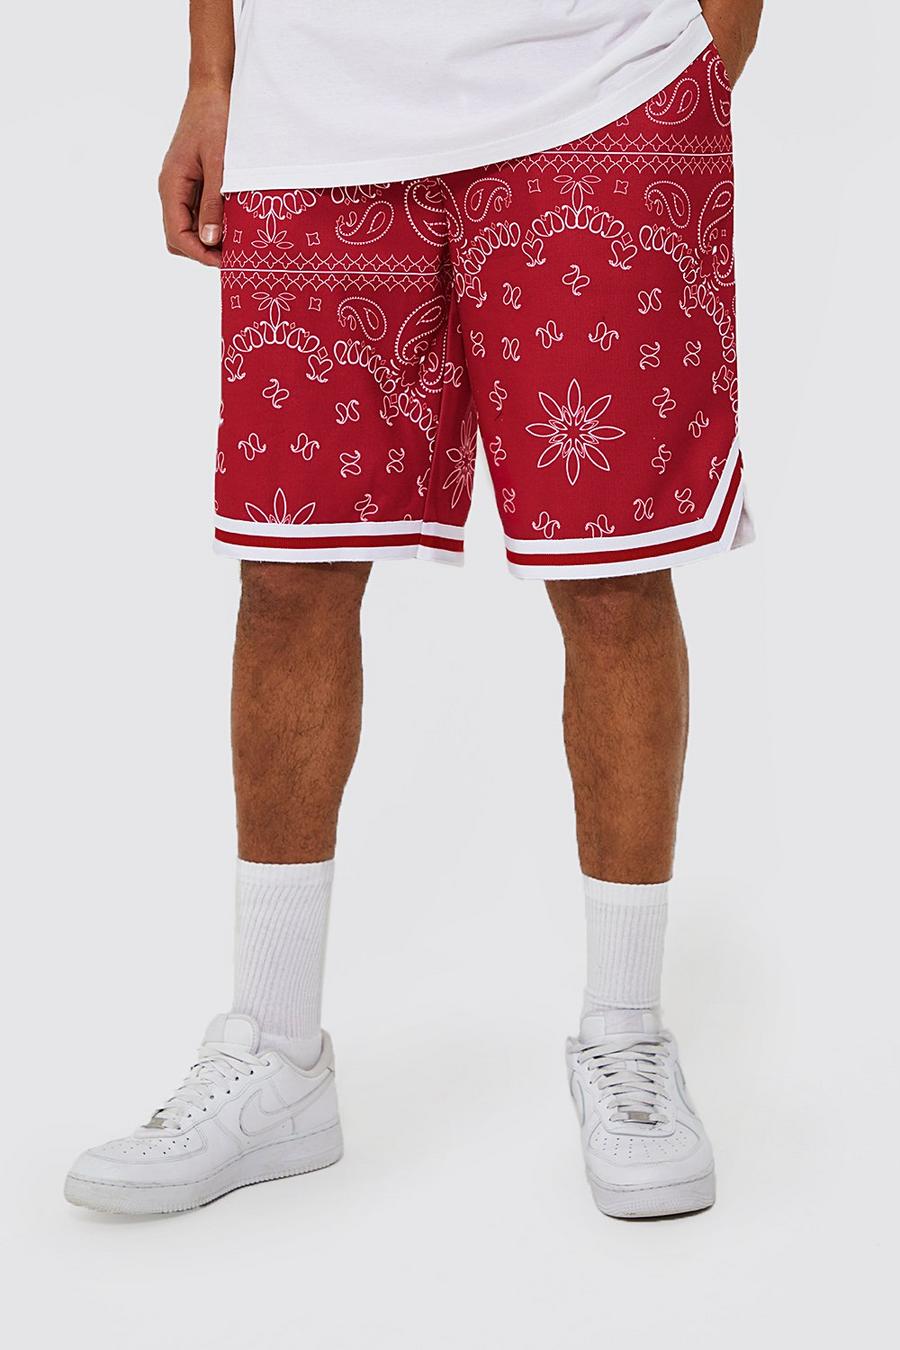 Tall Basketball-Shorts mit Bandana-Print und Streifen, Red rot